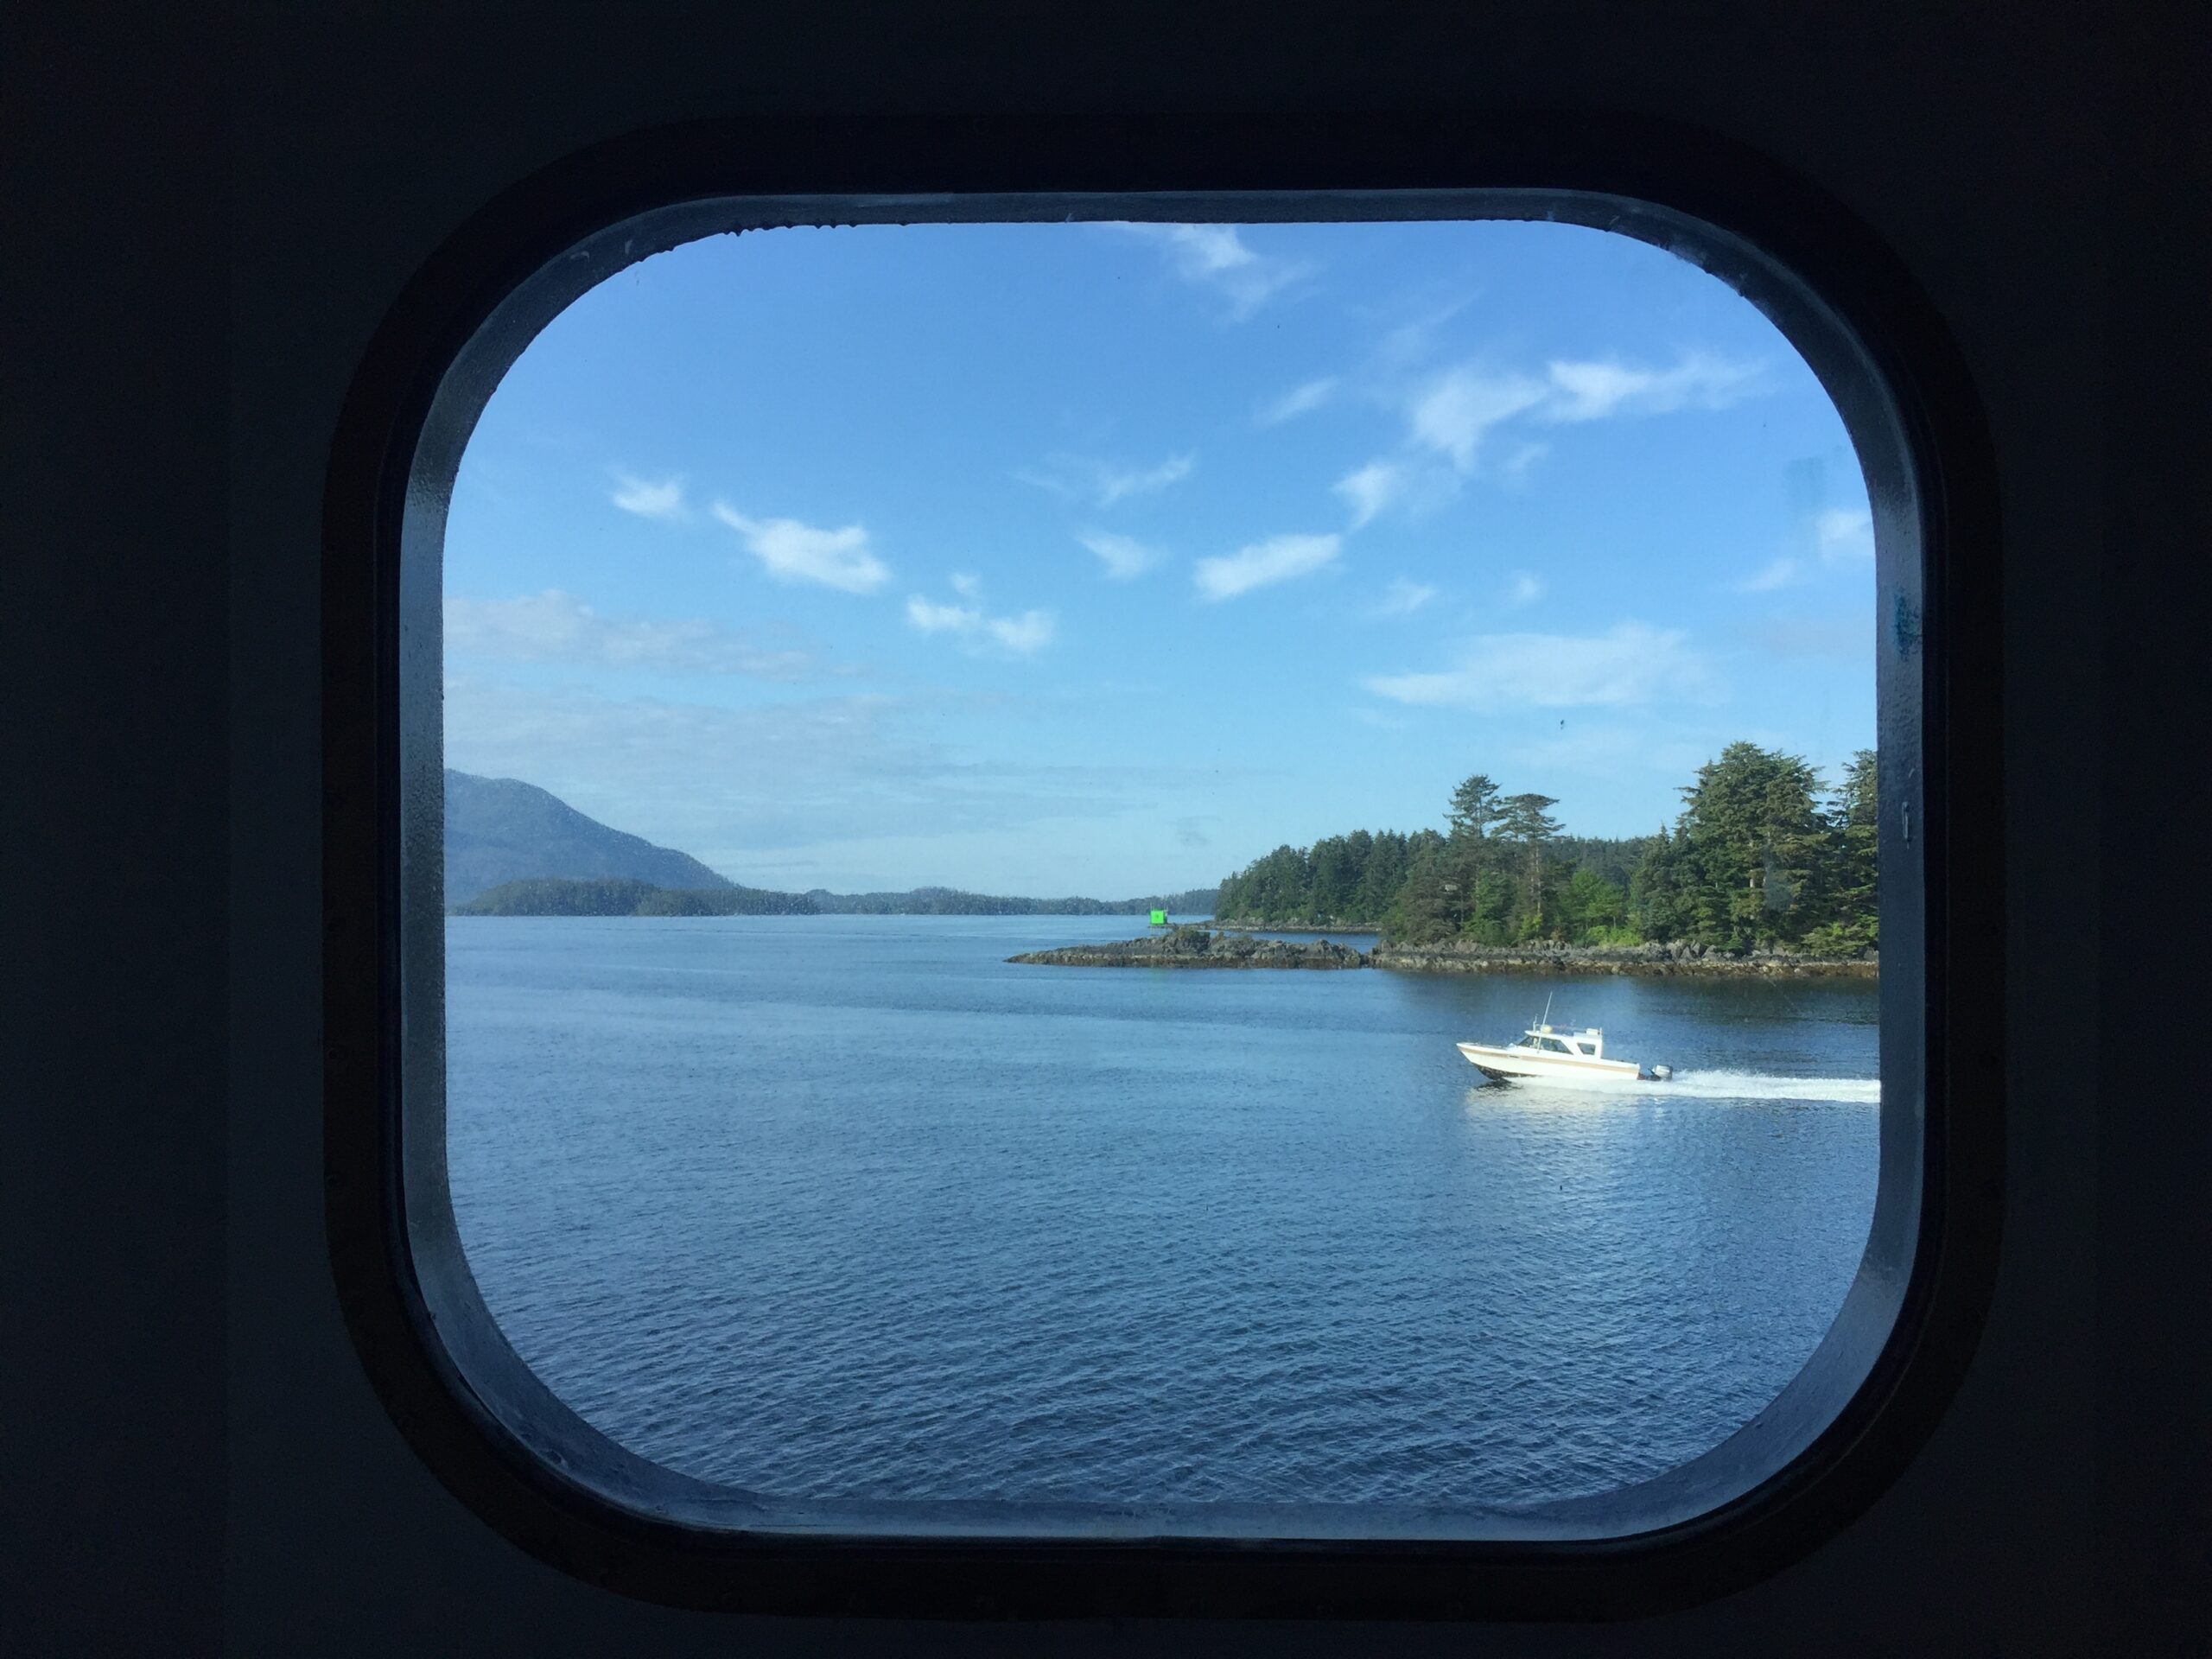 View through a ship window